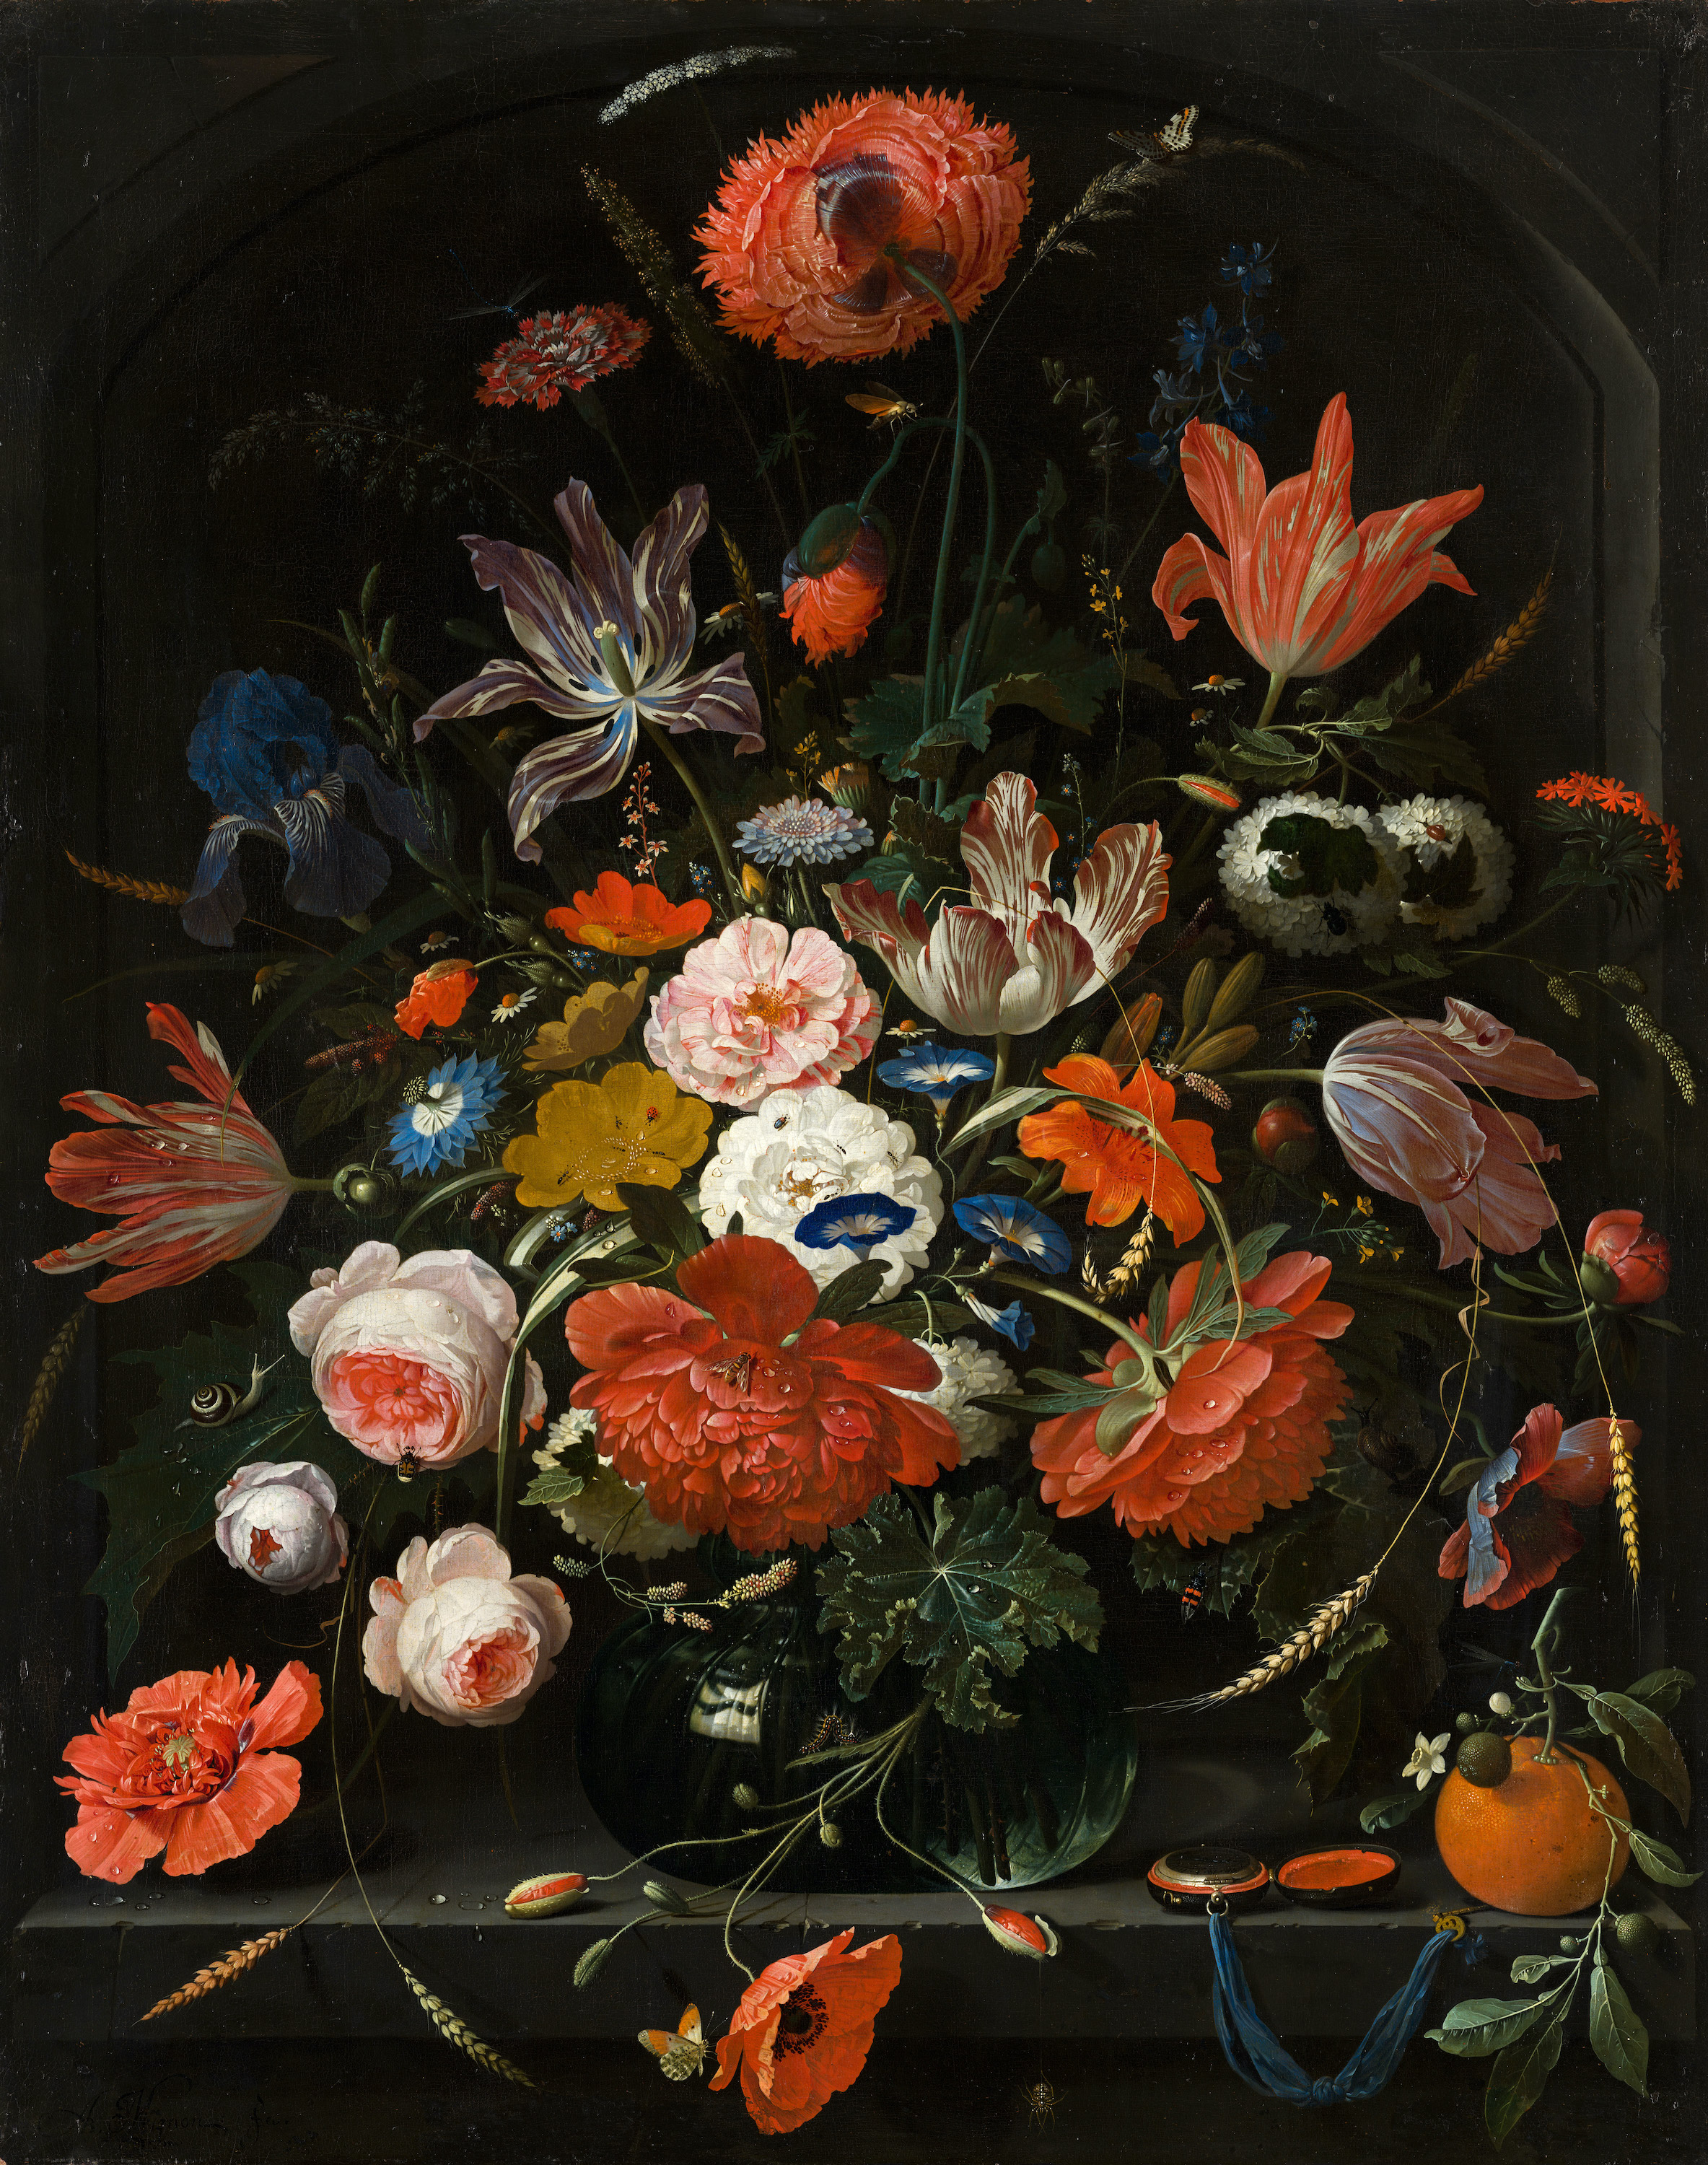 Flores num Vaso de Vidro by Abraham Mignon - 1670 - 72.5 x 90 cm 